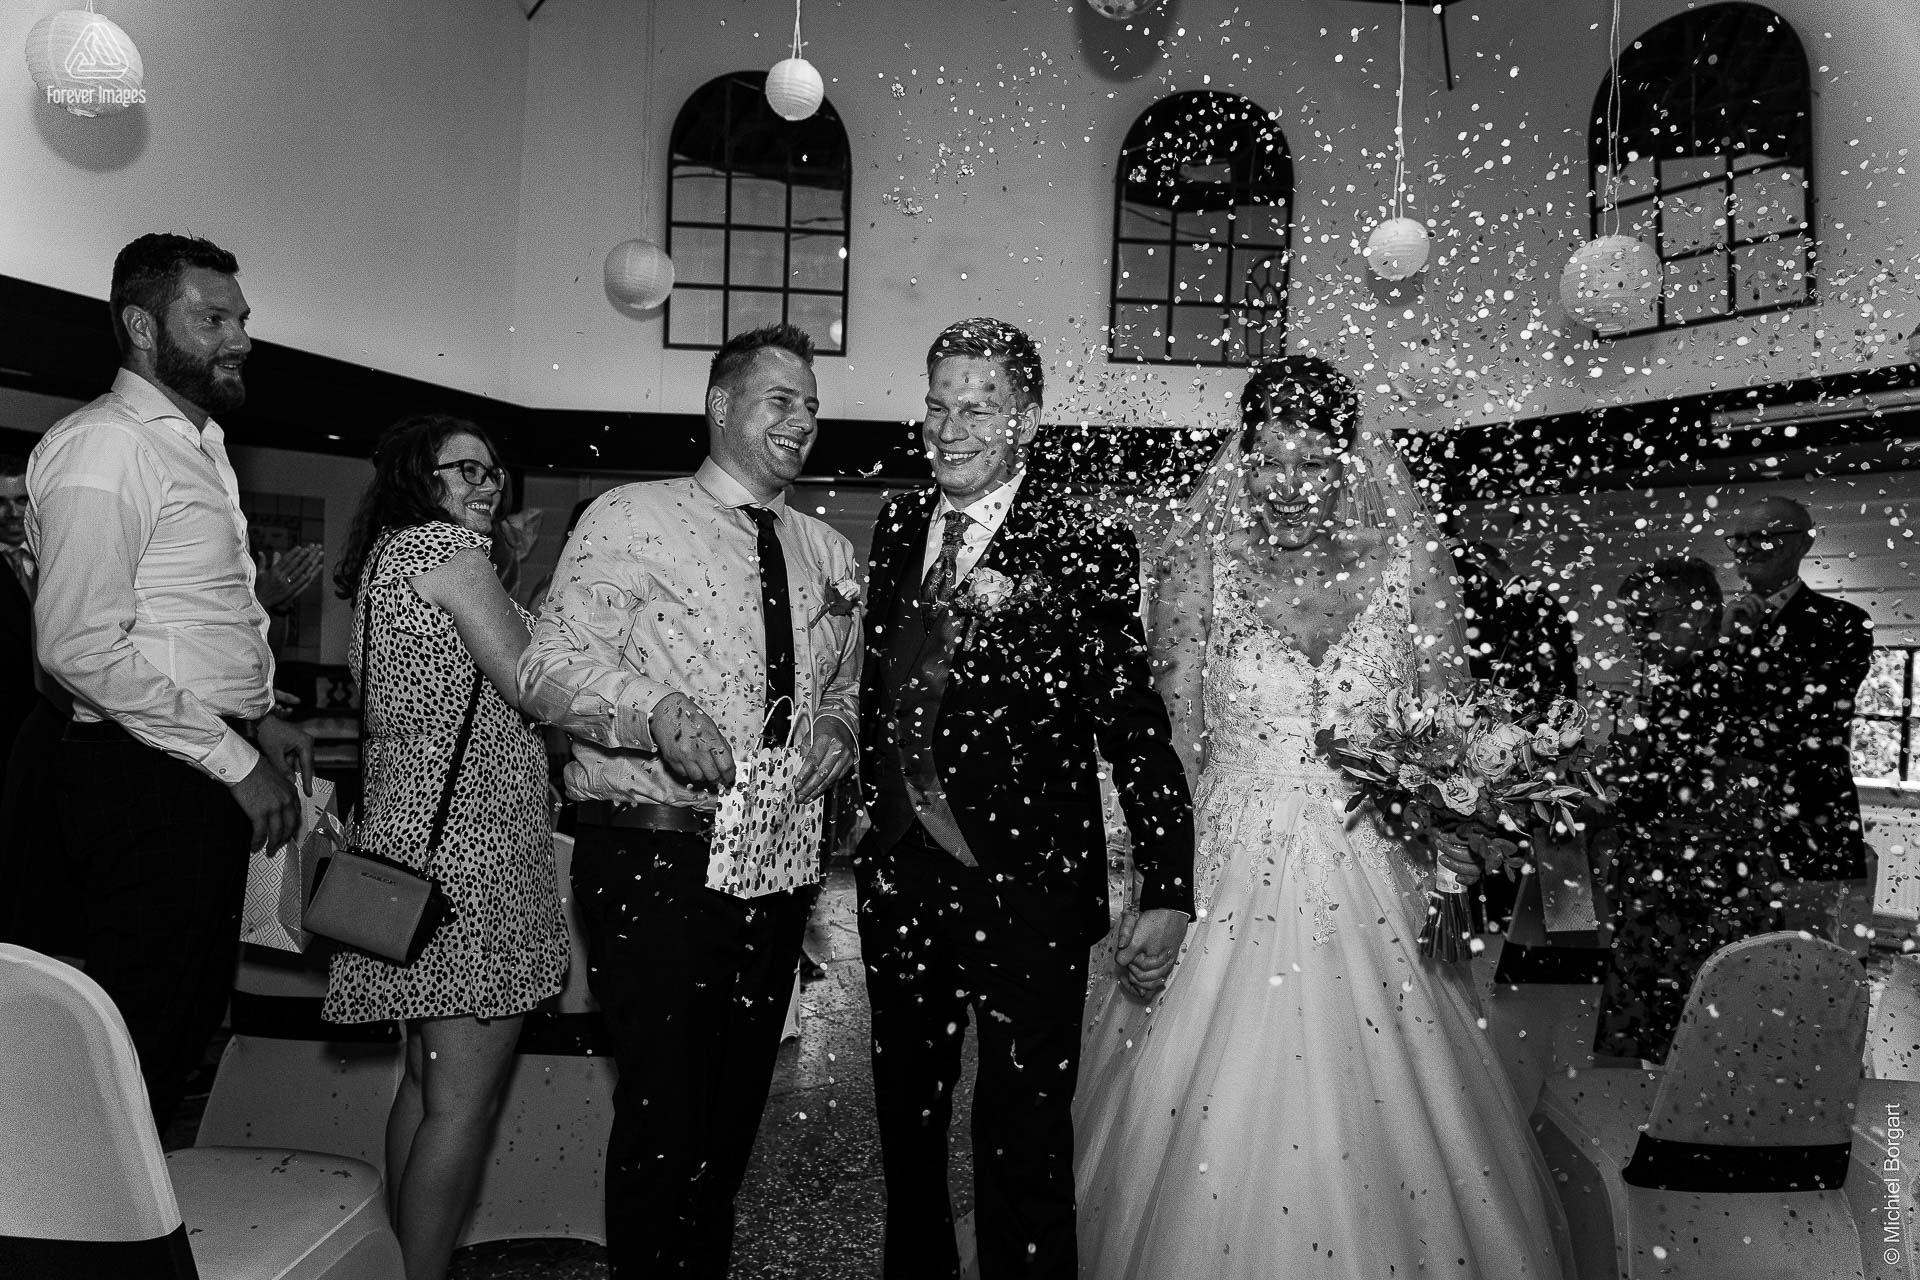 Bruidsfoto zwart-wit getrouwd met confetti | Aaron Emmy Kloosterhoeve | Bruidsfotograaf Michiel Borgart - Forever Images.